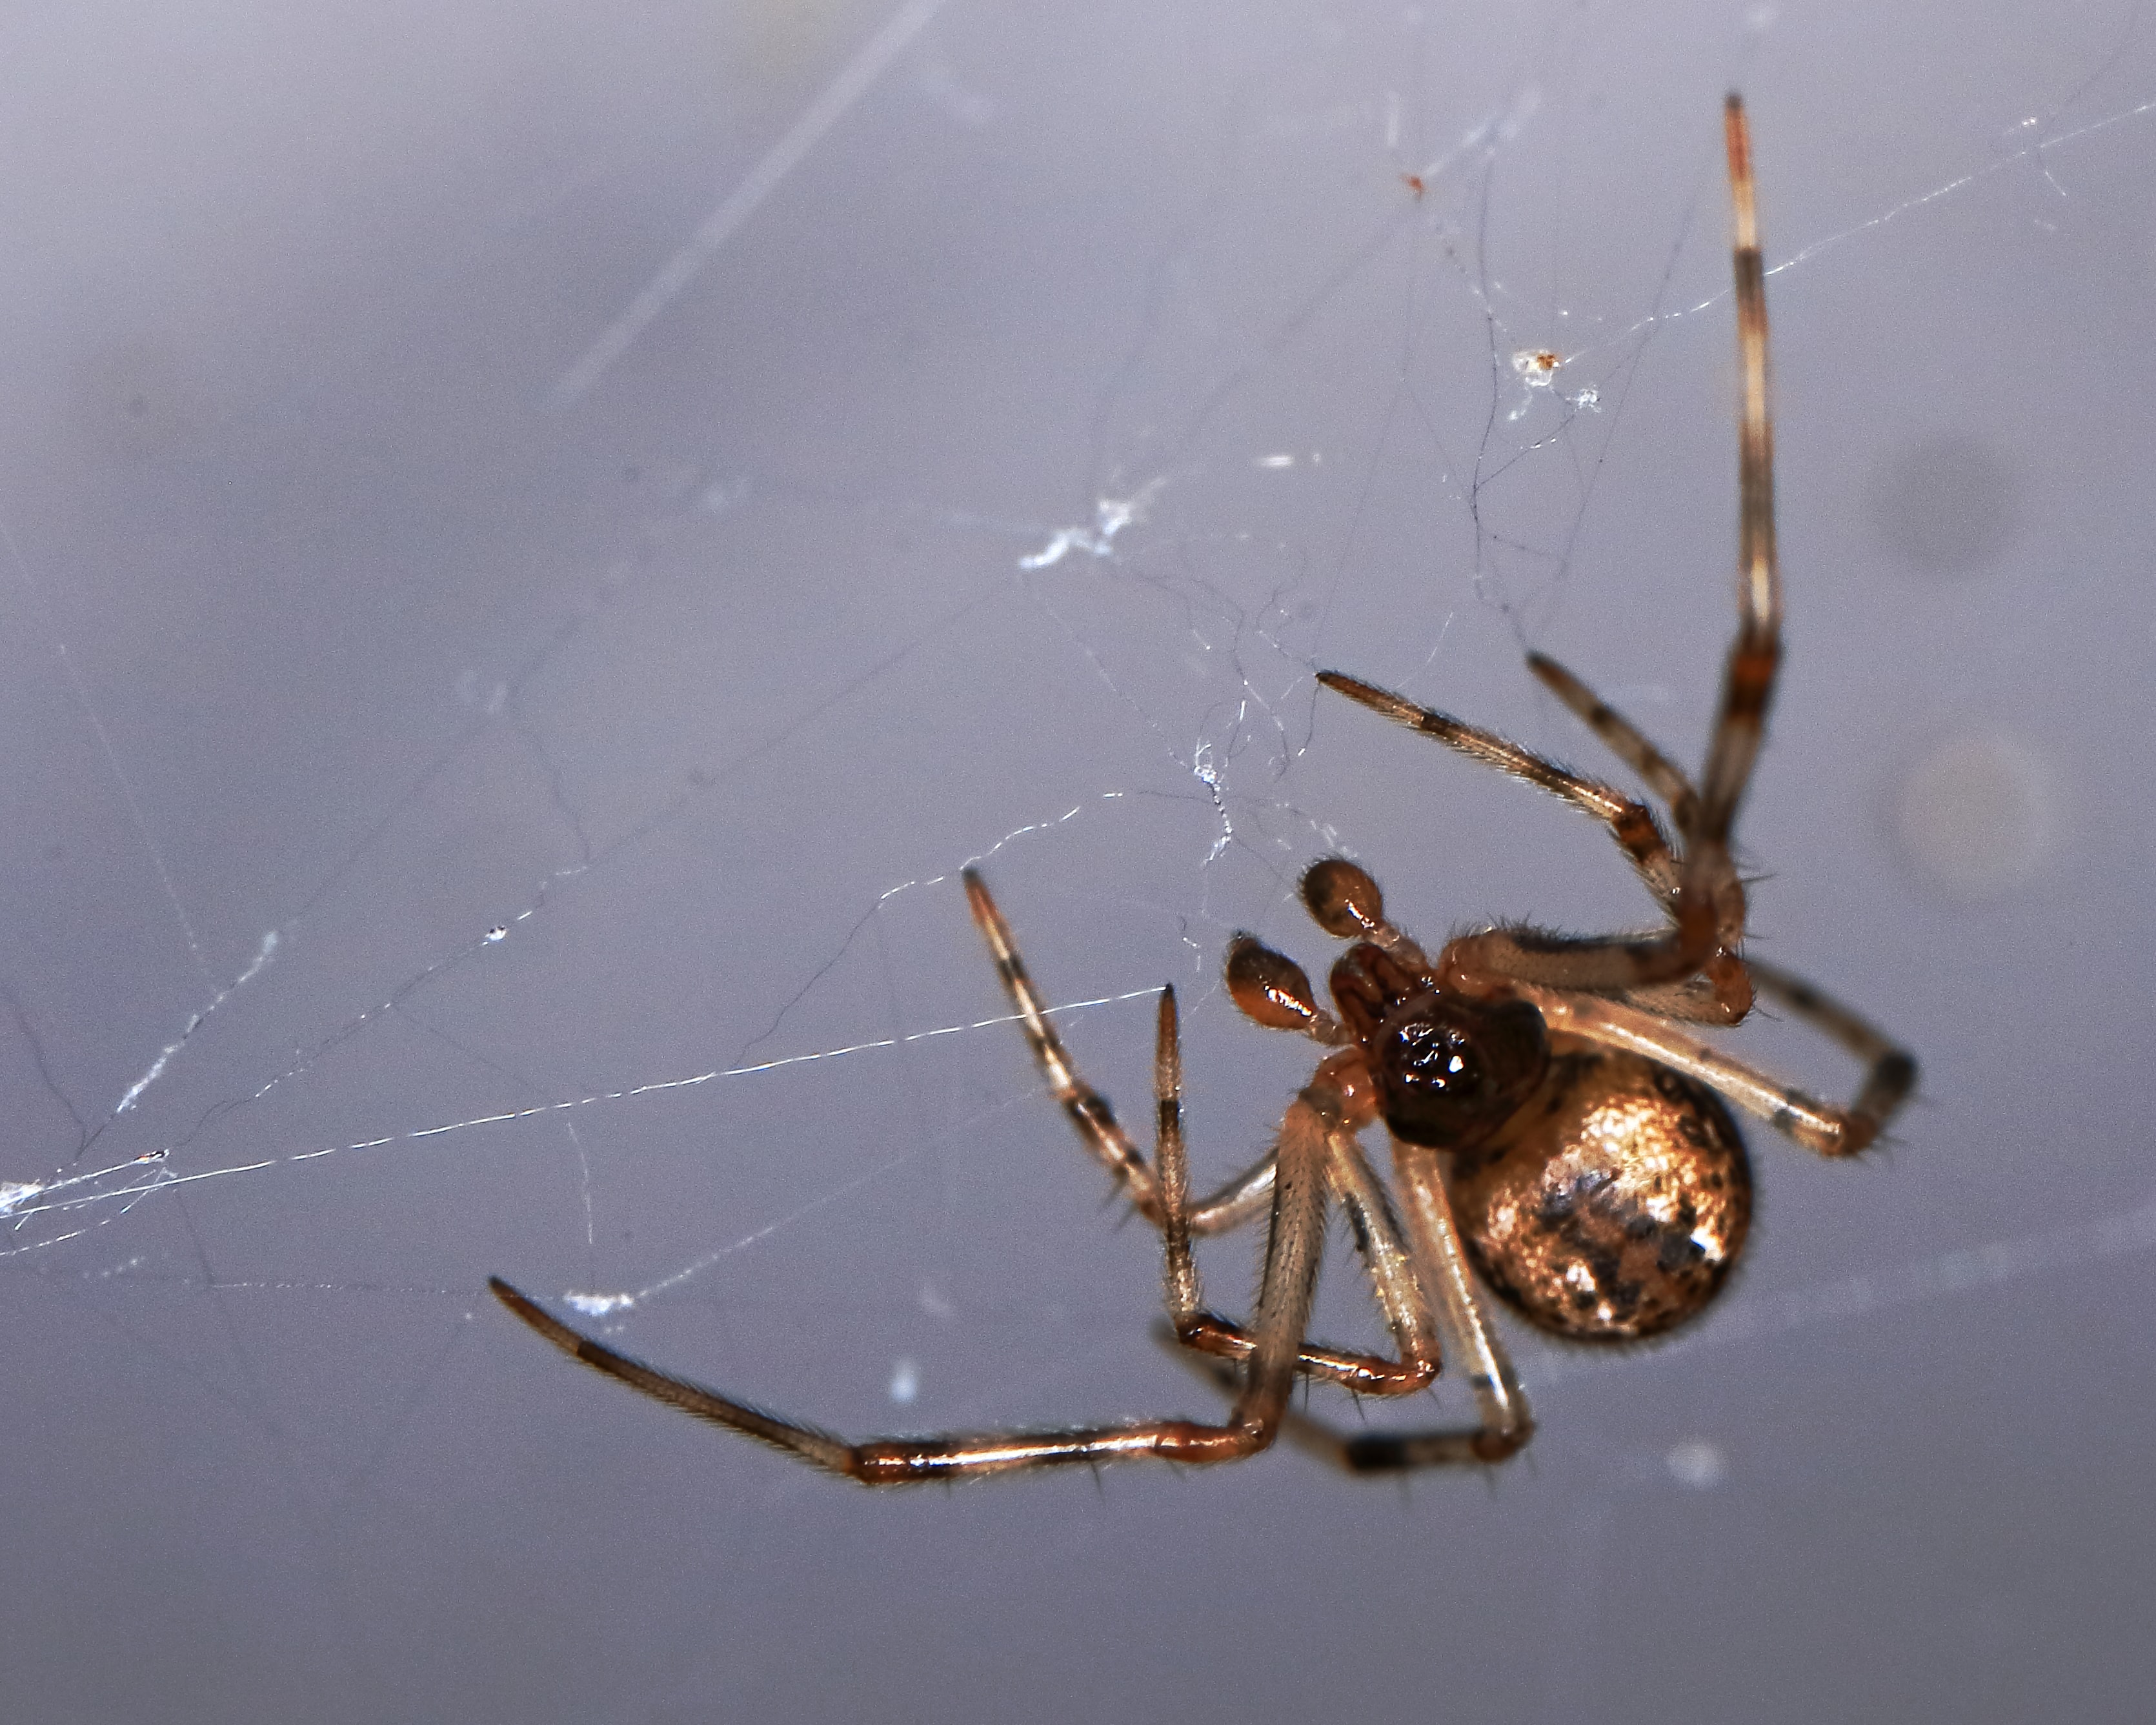 Picture of Parasteatoda tepidariorum (Common House Spider) - Male - Eyes,Webs